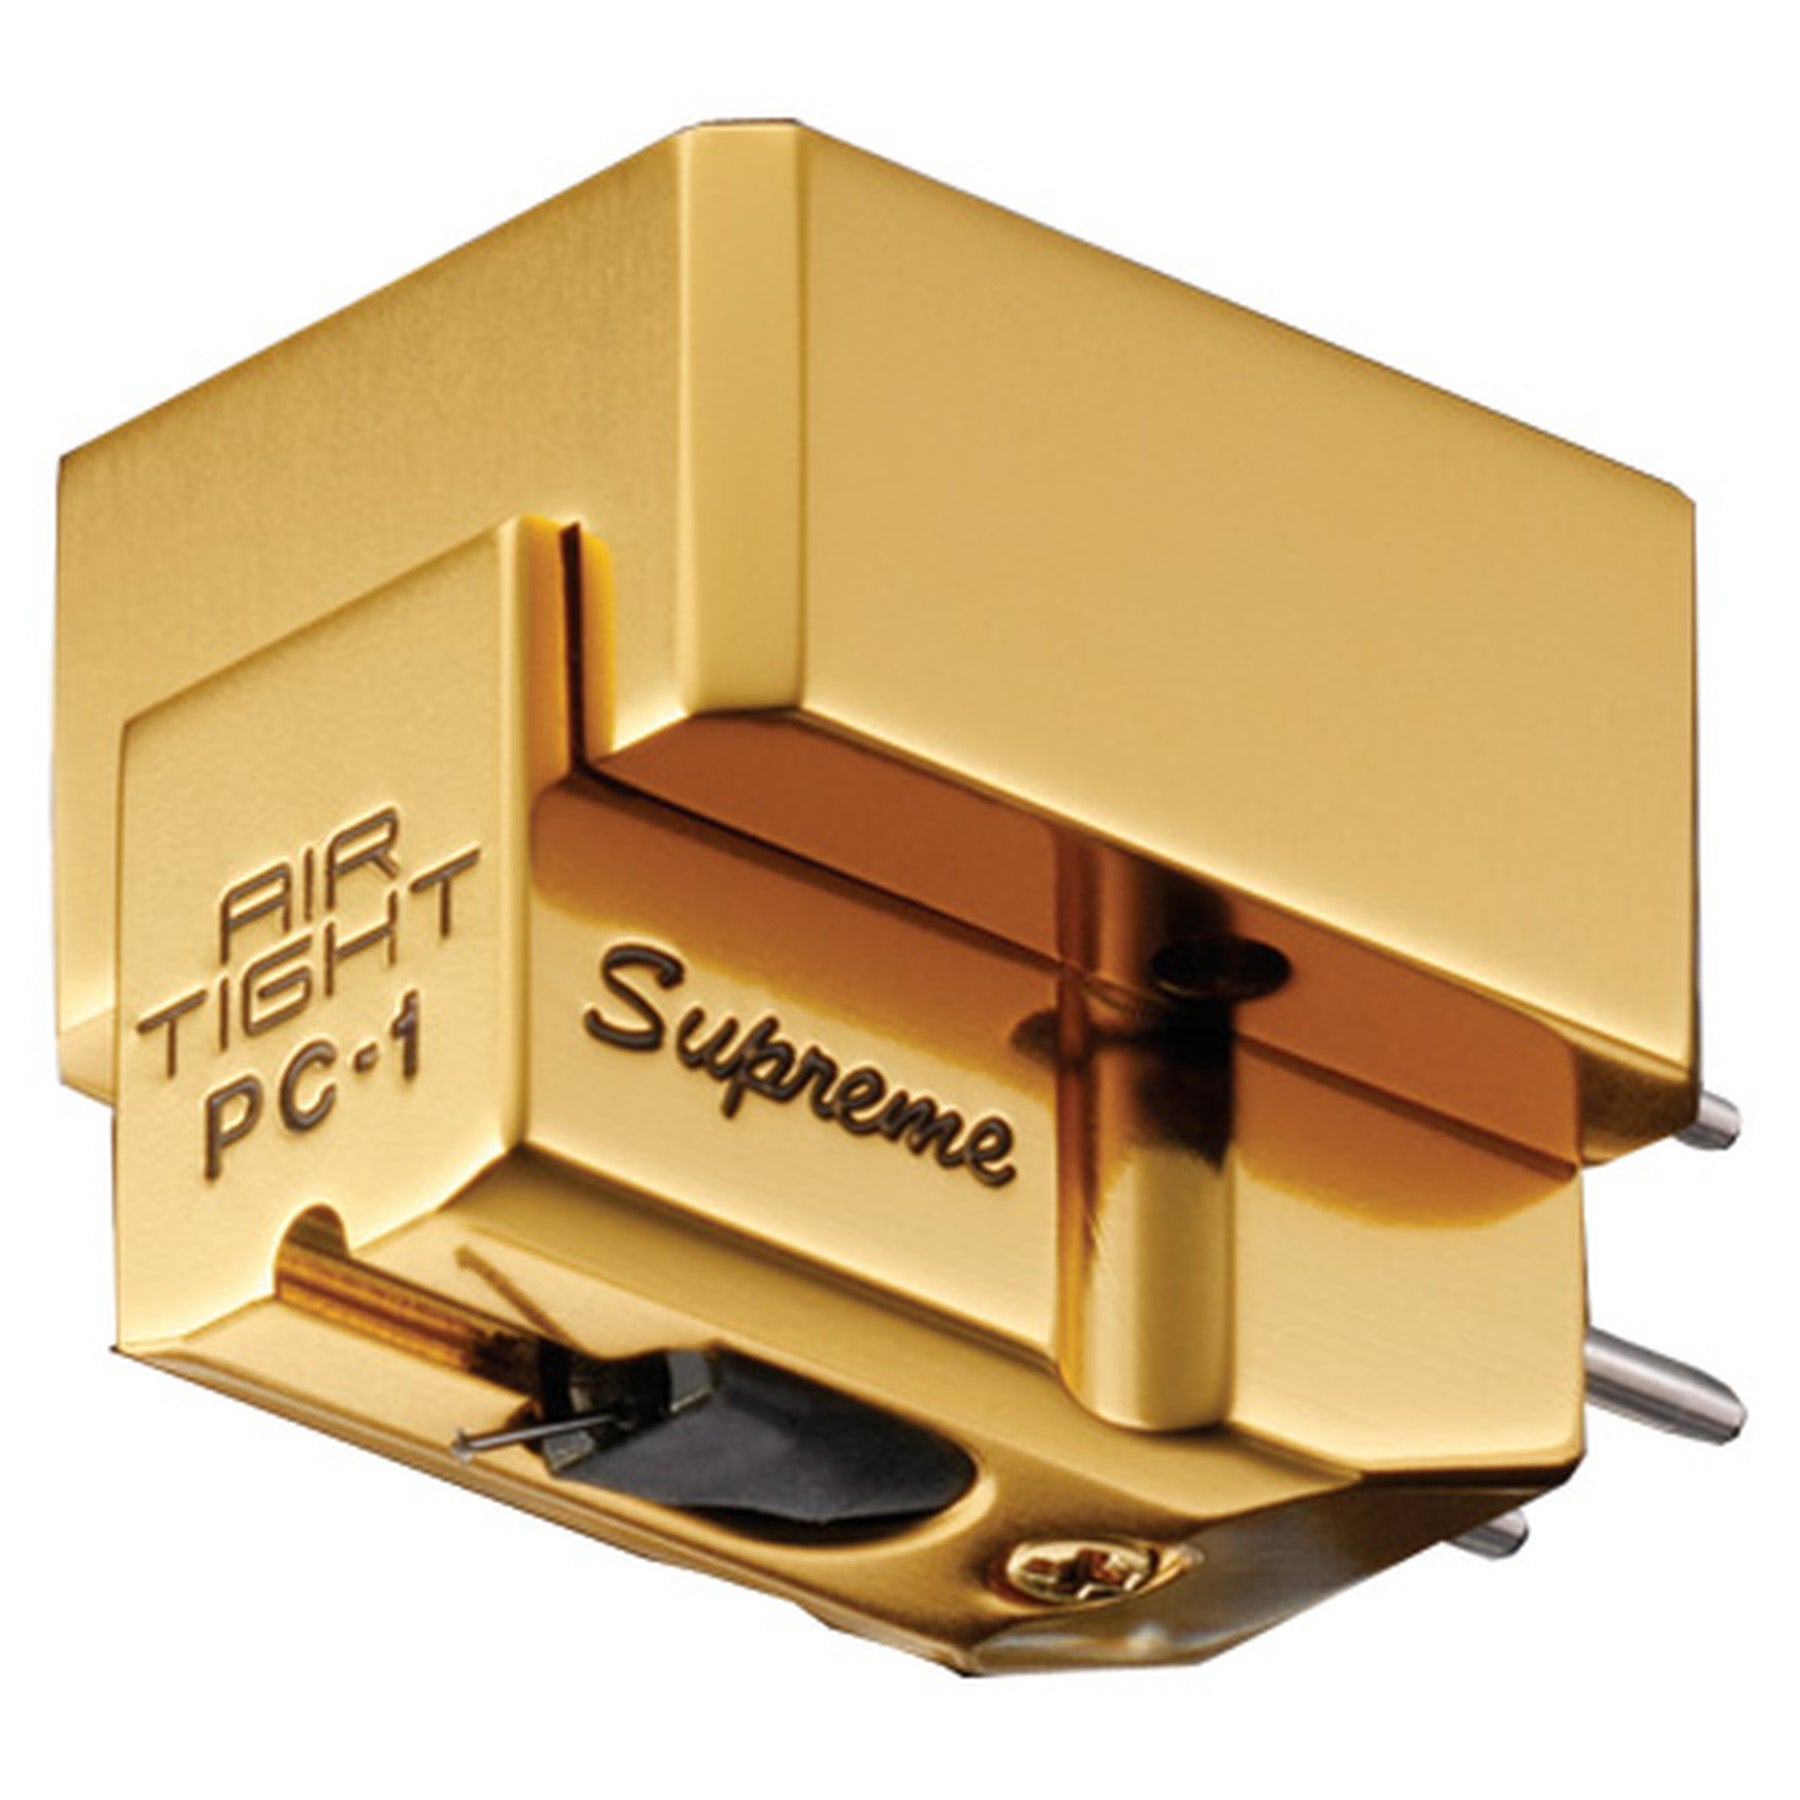 Air Tight PC-1 Supreme Stereo MC Phono Cartridge